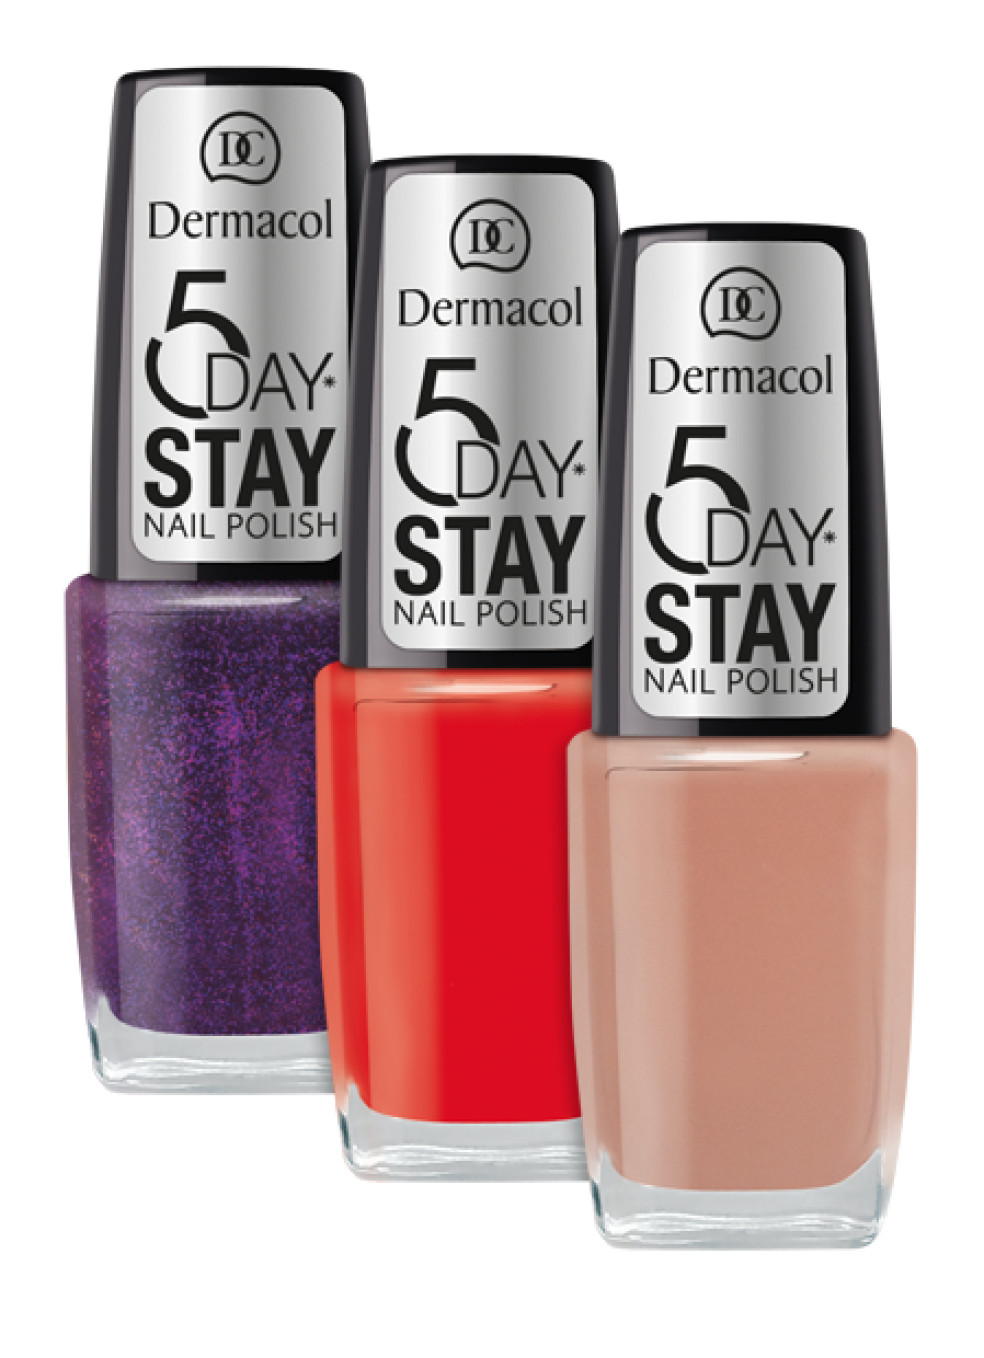 Dermacol - 5 days stay nail polish